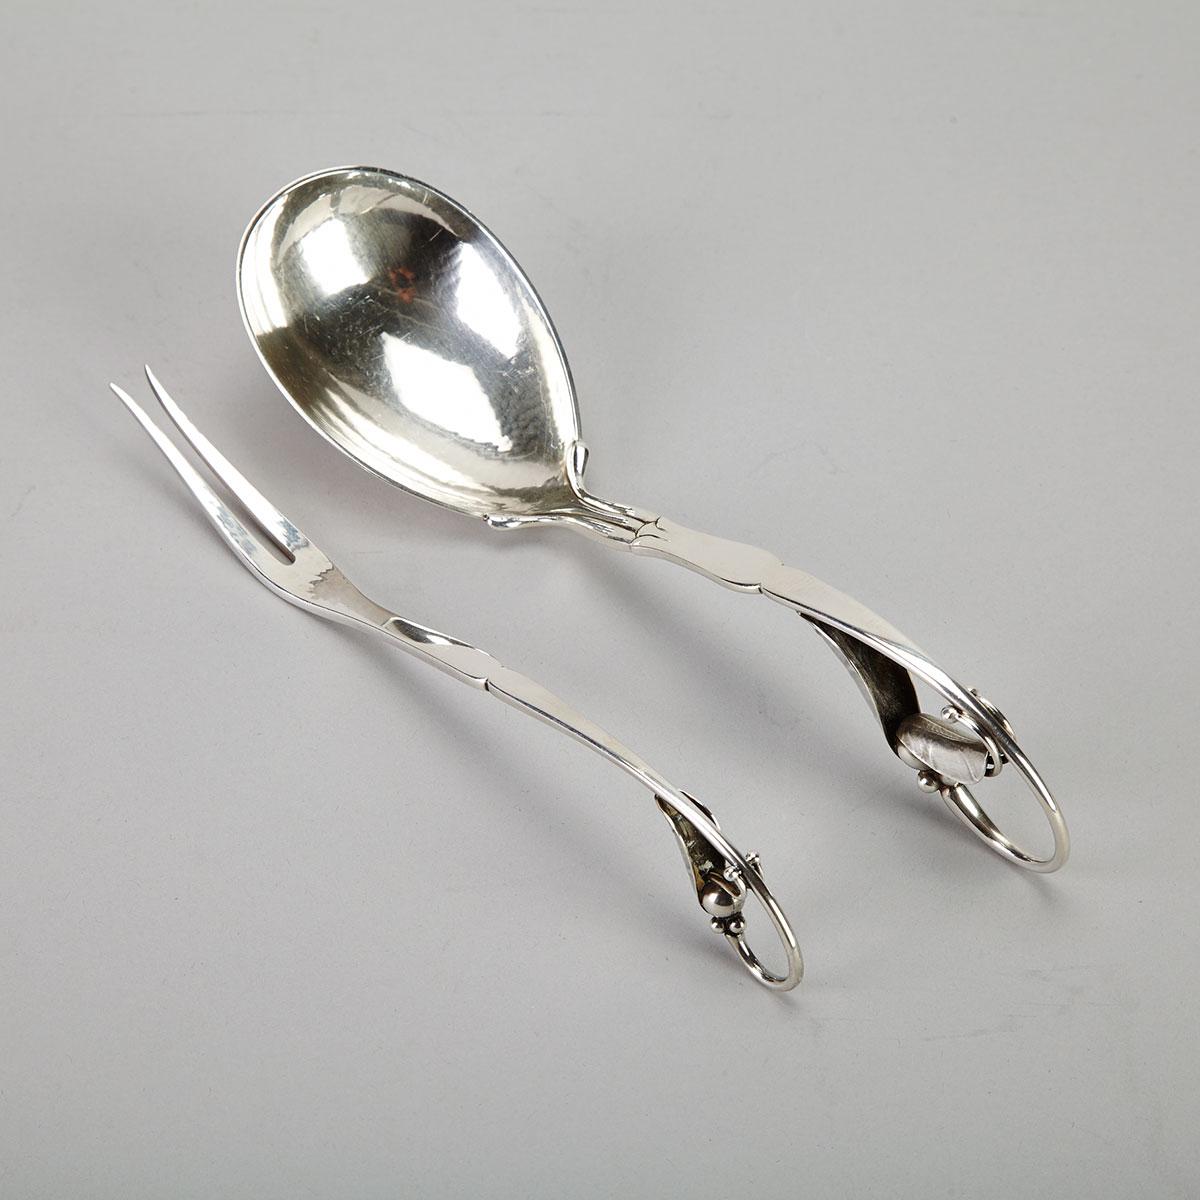 Danish Silver Serving Spoon and Fork, #141 and #21, Georg Jensen, Copenhagen, mid-20th century